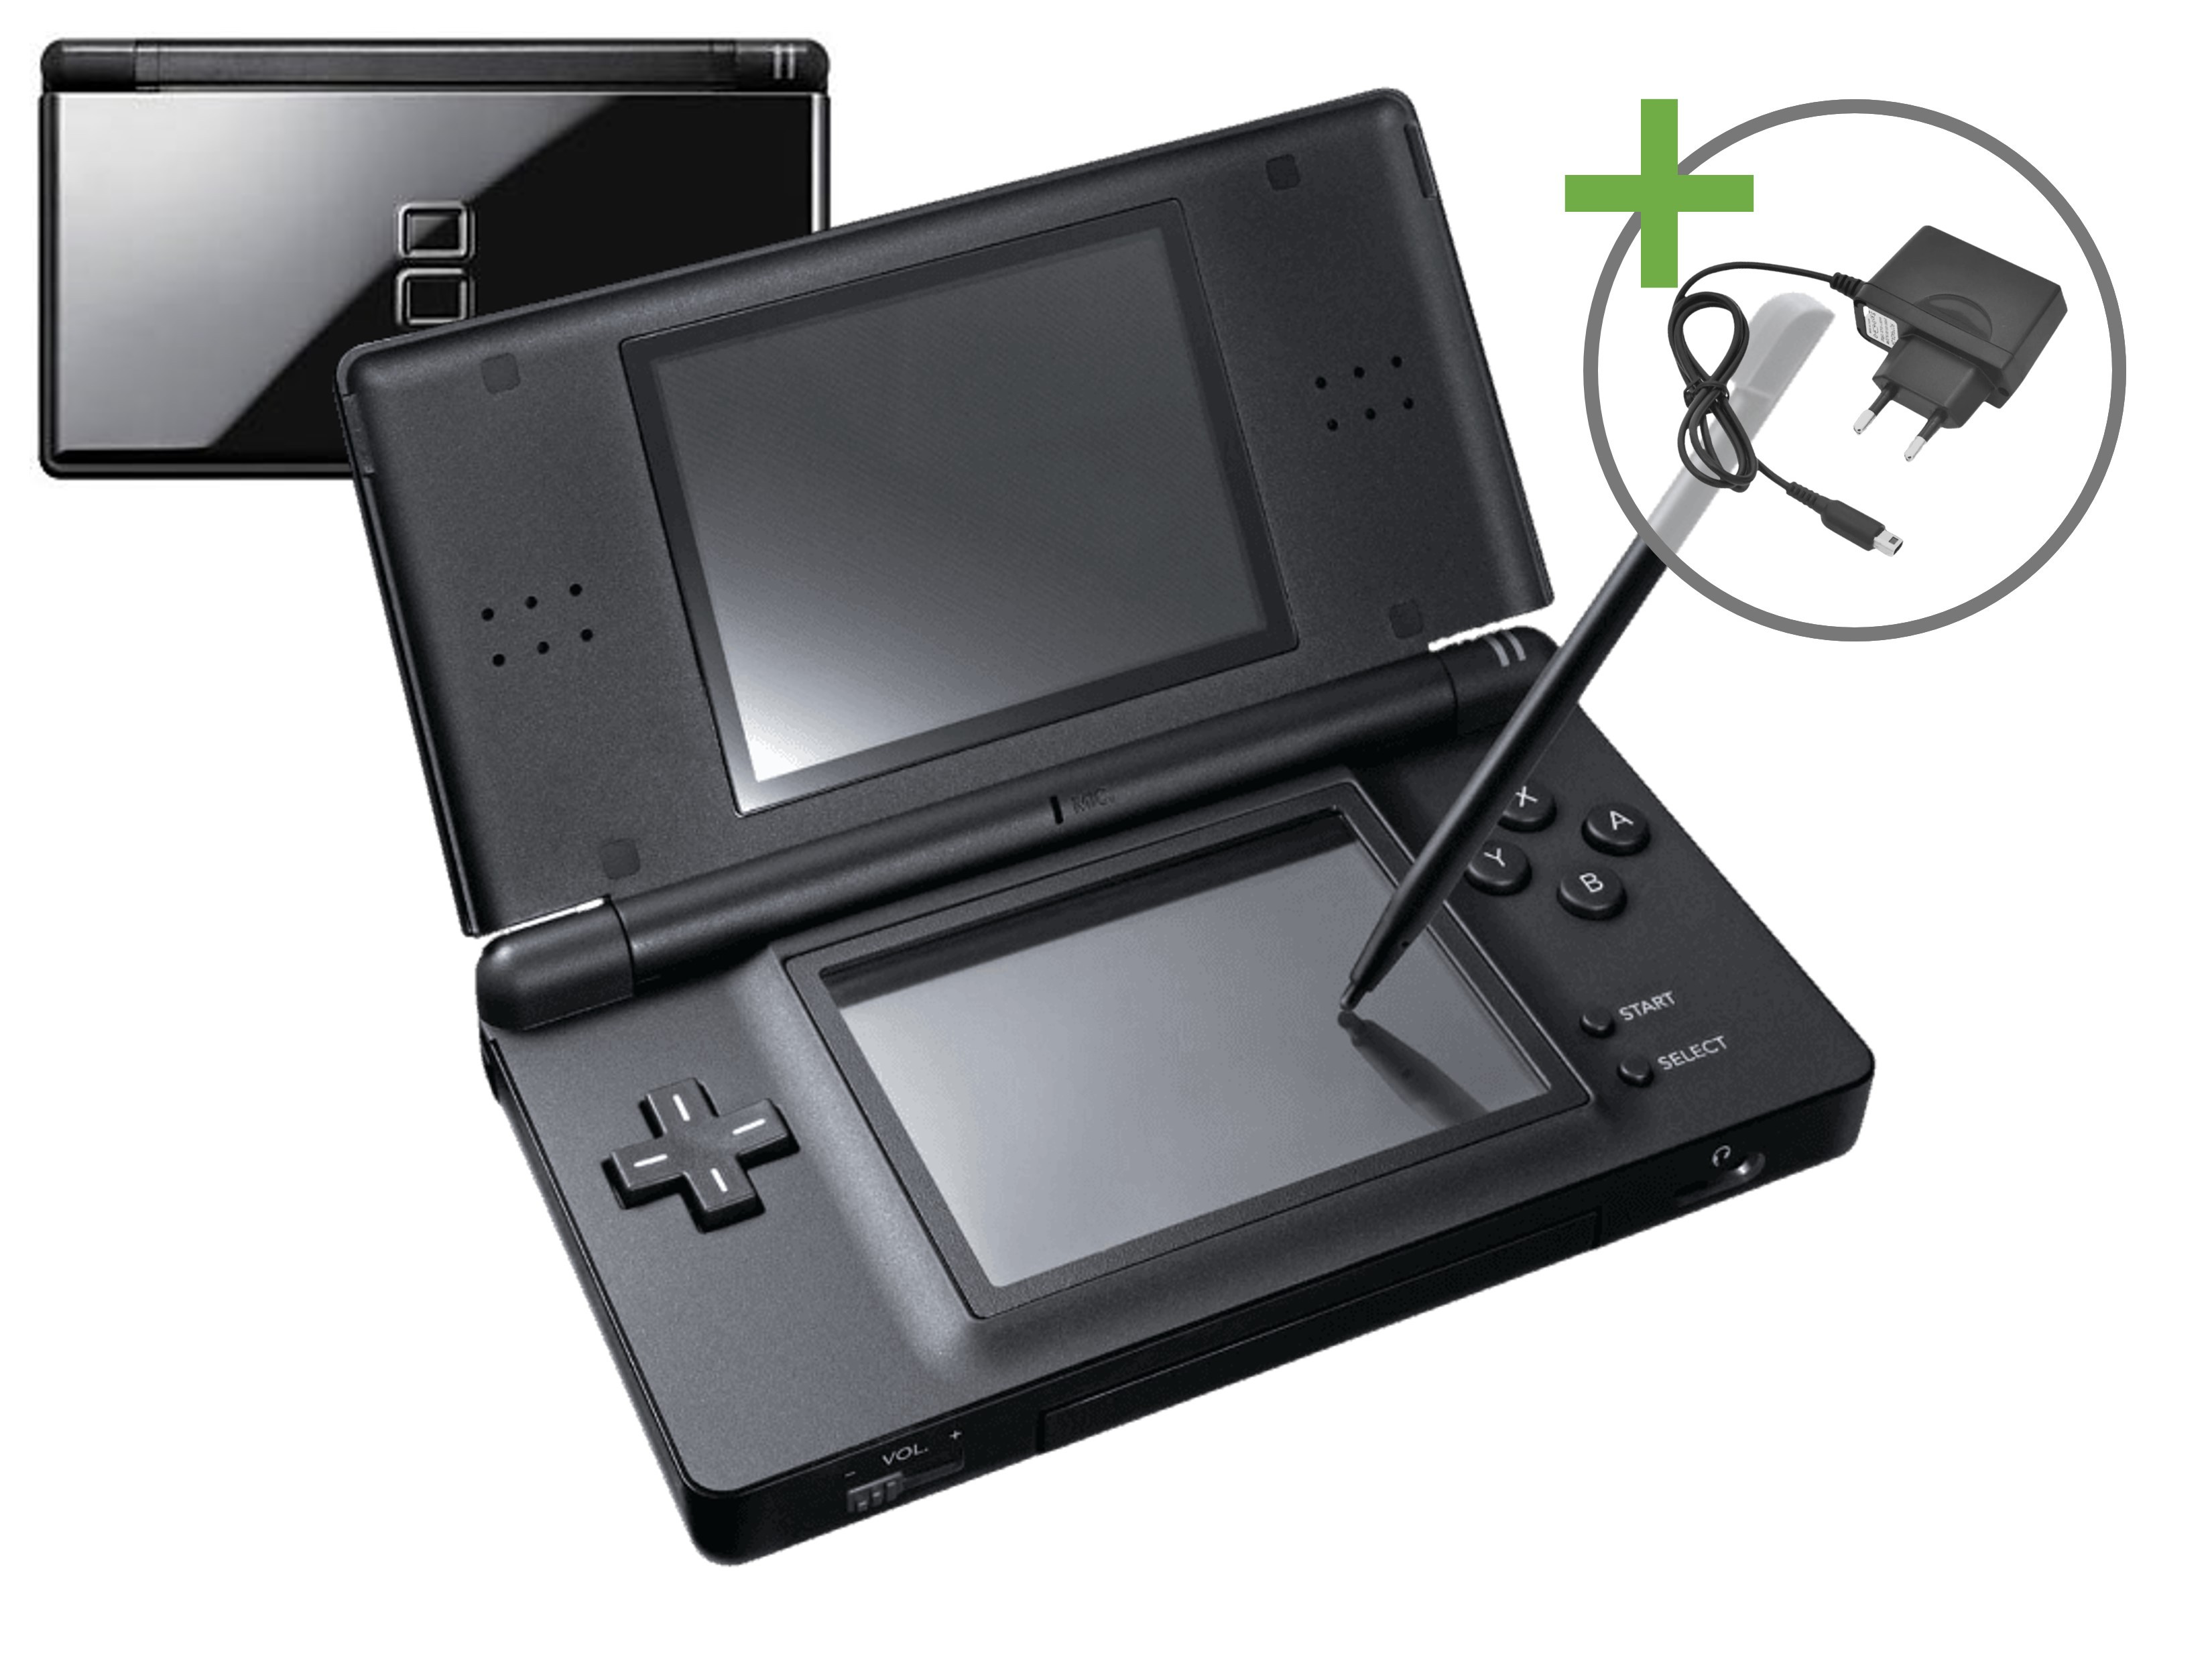 Nintendo DS Lite - Black (Cobalt) [Complete] - Nintendo DS Hardware - 2